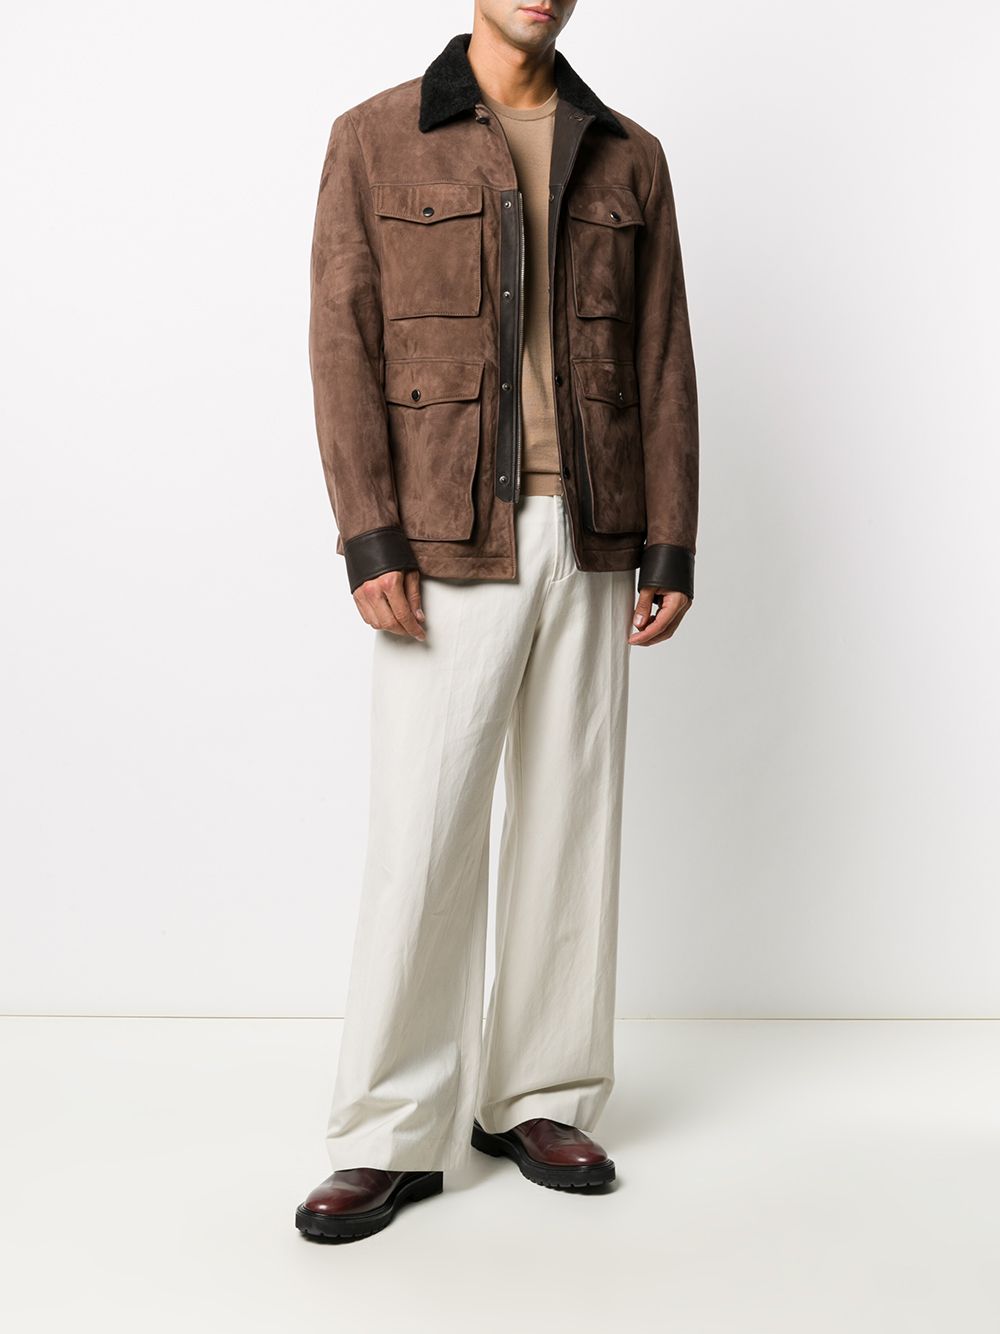 Ajmone brown suede safari jacket for men | Z1MSF1 at Farfetch.com